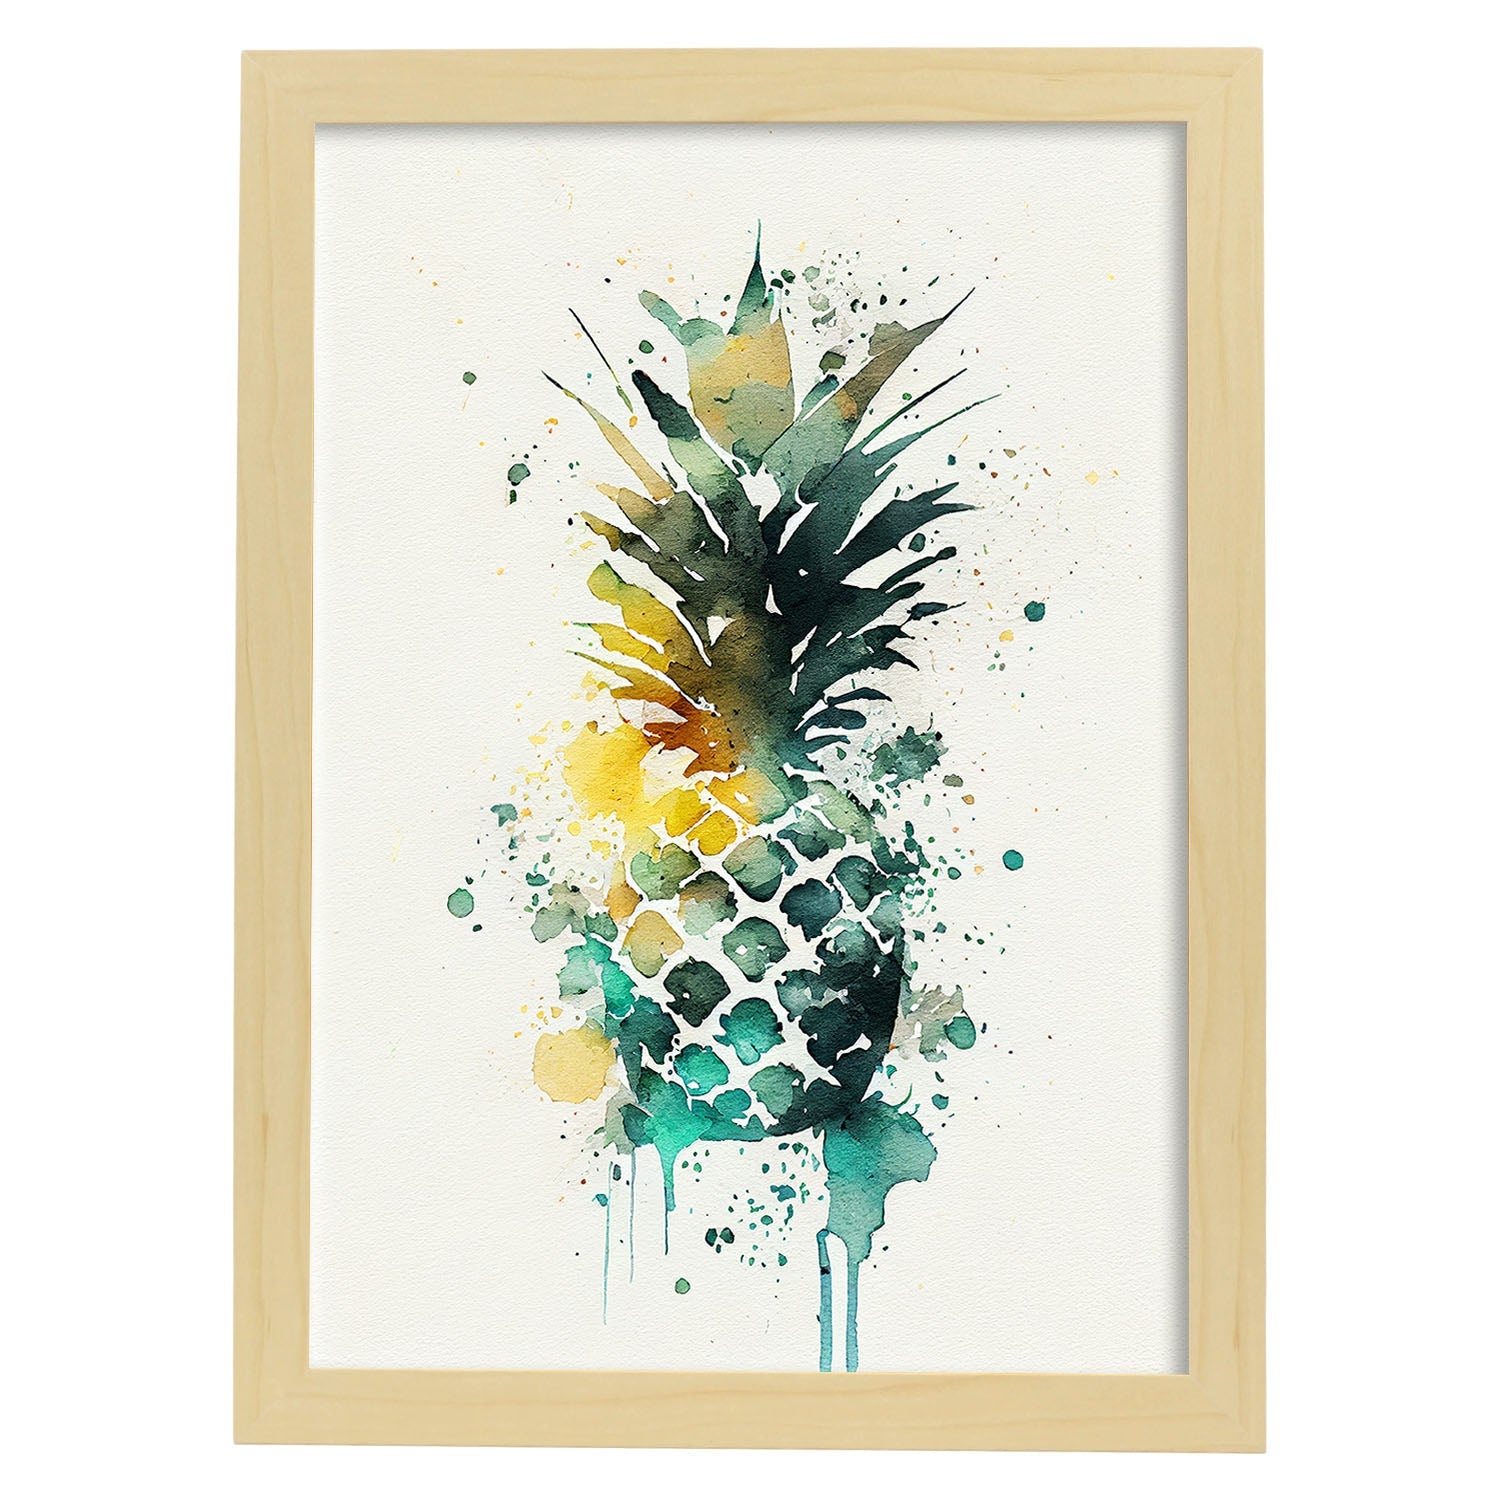 Nacnic minimalist Pineapple_6. Aesthetic Wall Art Prints for Bedroom or Living Room Design.-Artwork-Nacnic-A4-Marco Madera Clara-Nacnic Estudio SL